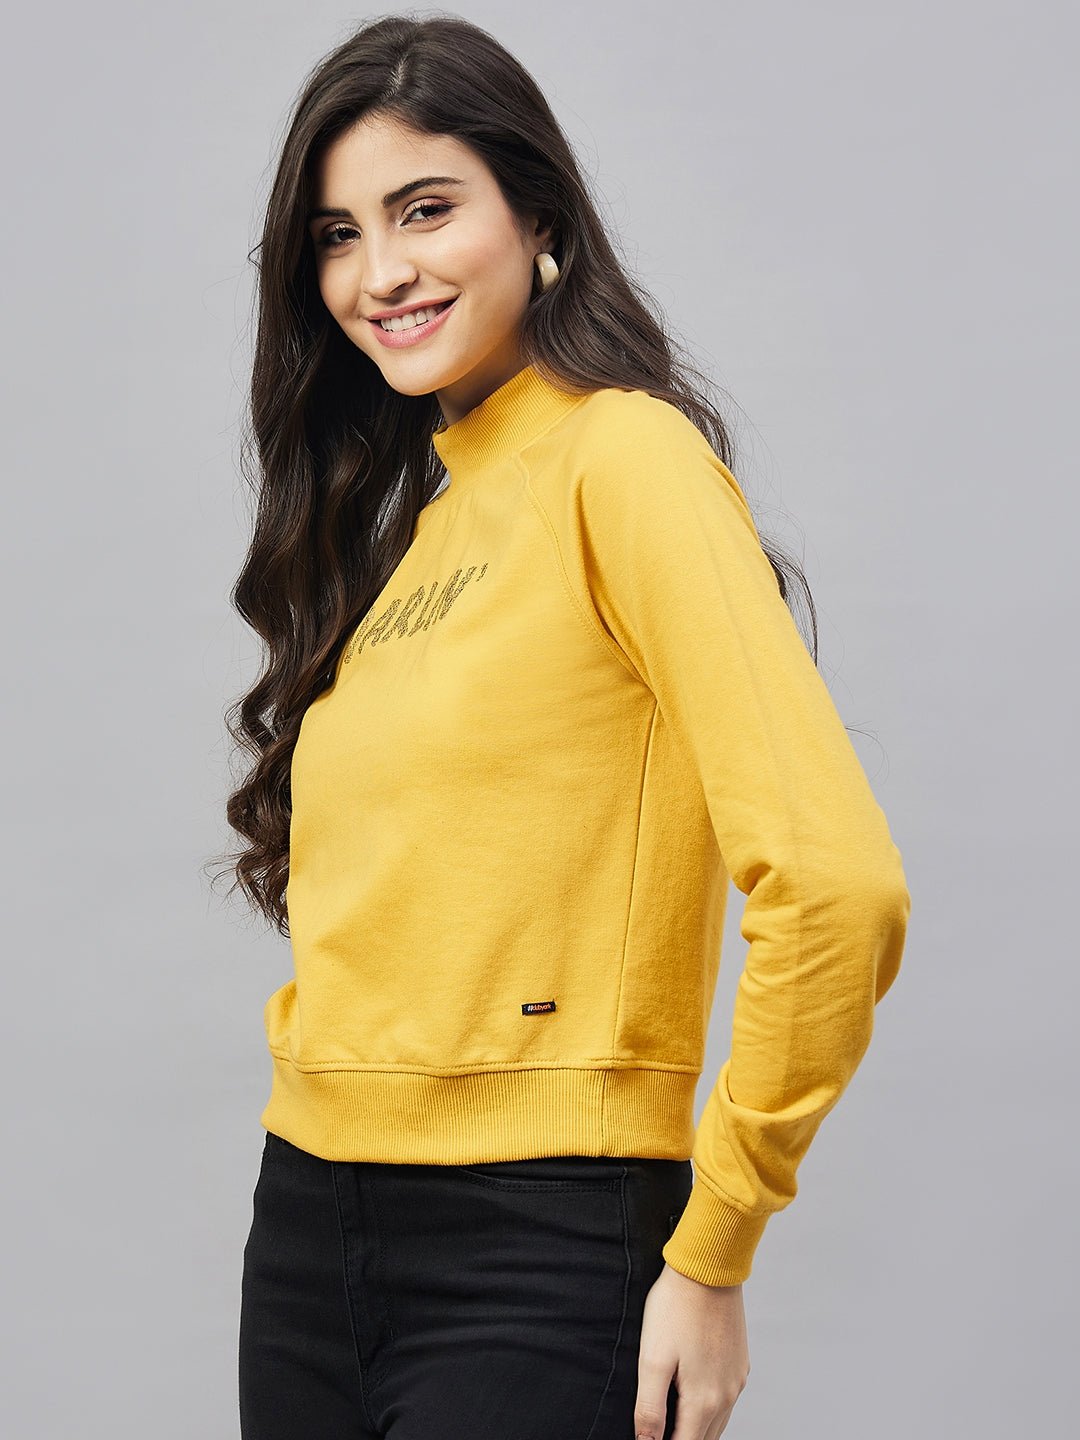 Yellow Printed Sweatshirt - clubyork